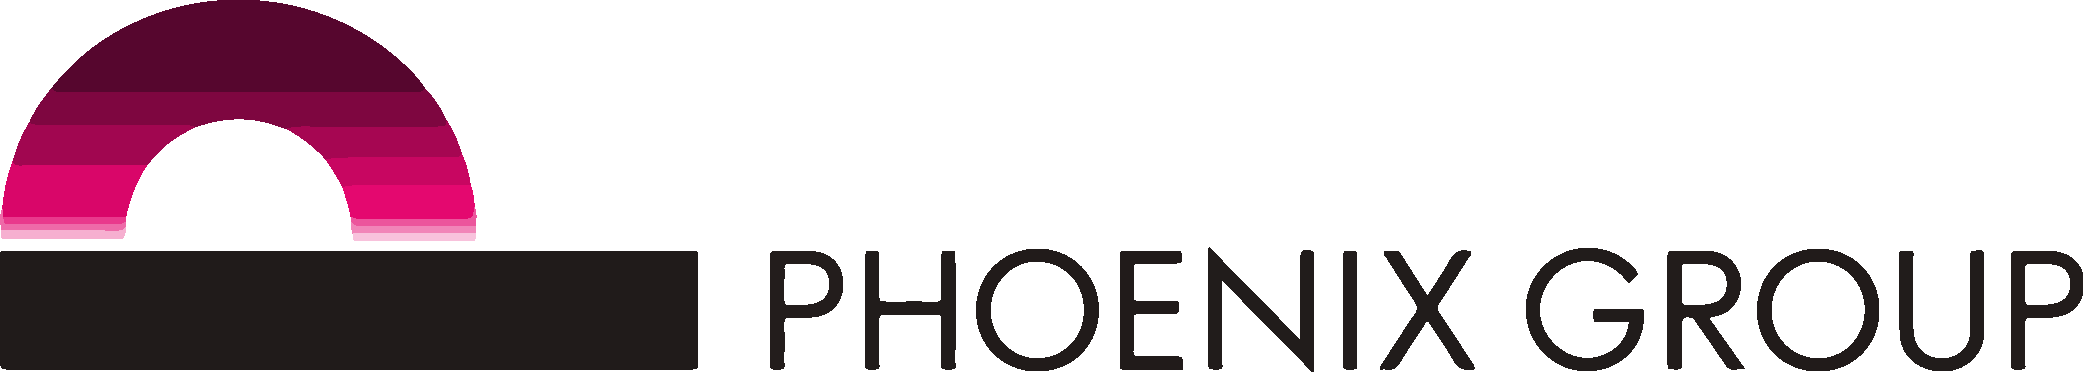 Phoenix Group Logo Vector